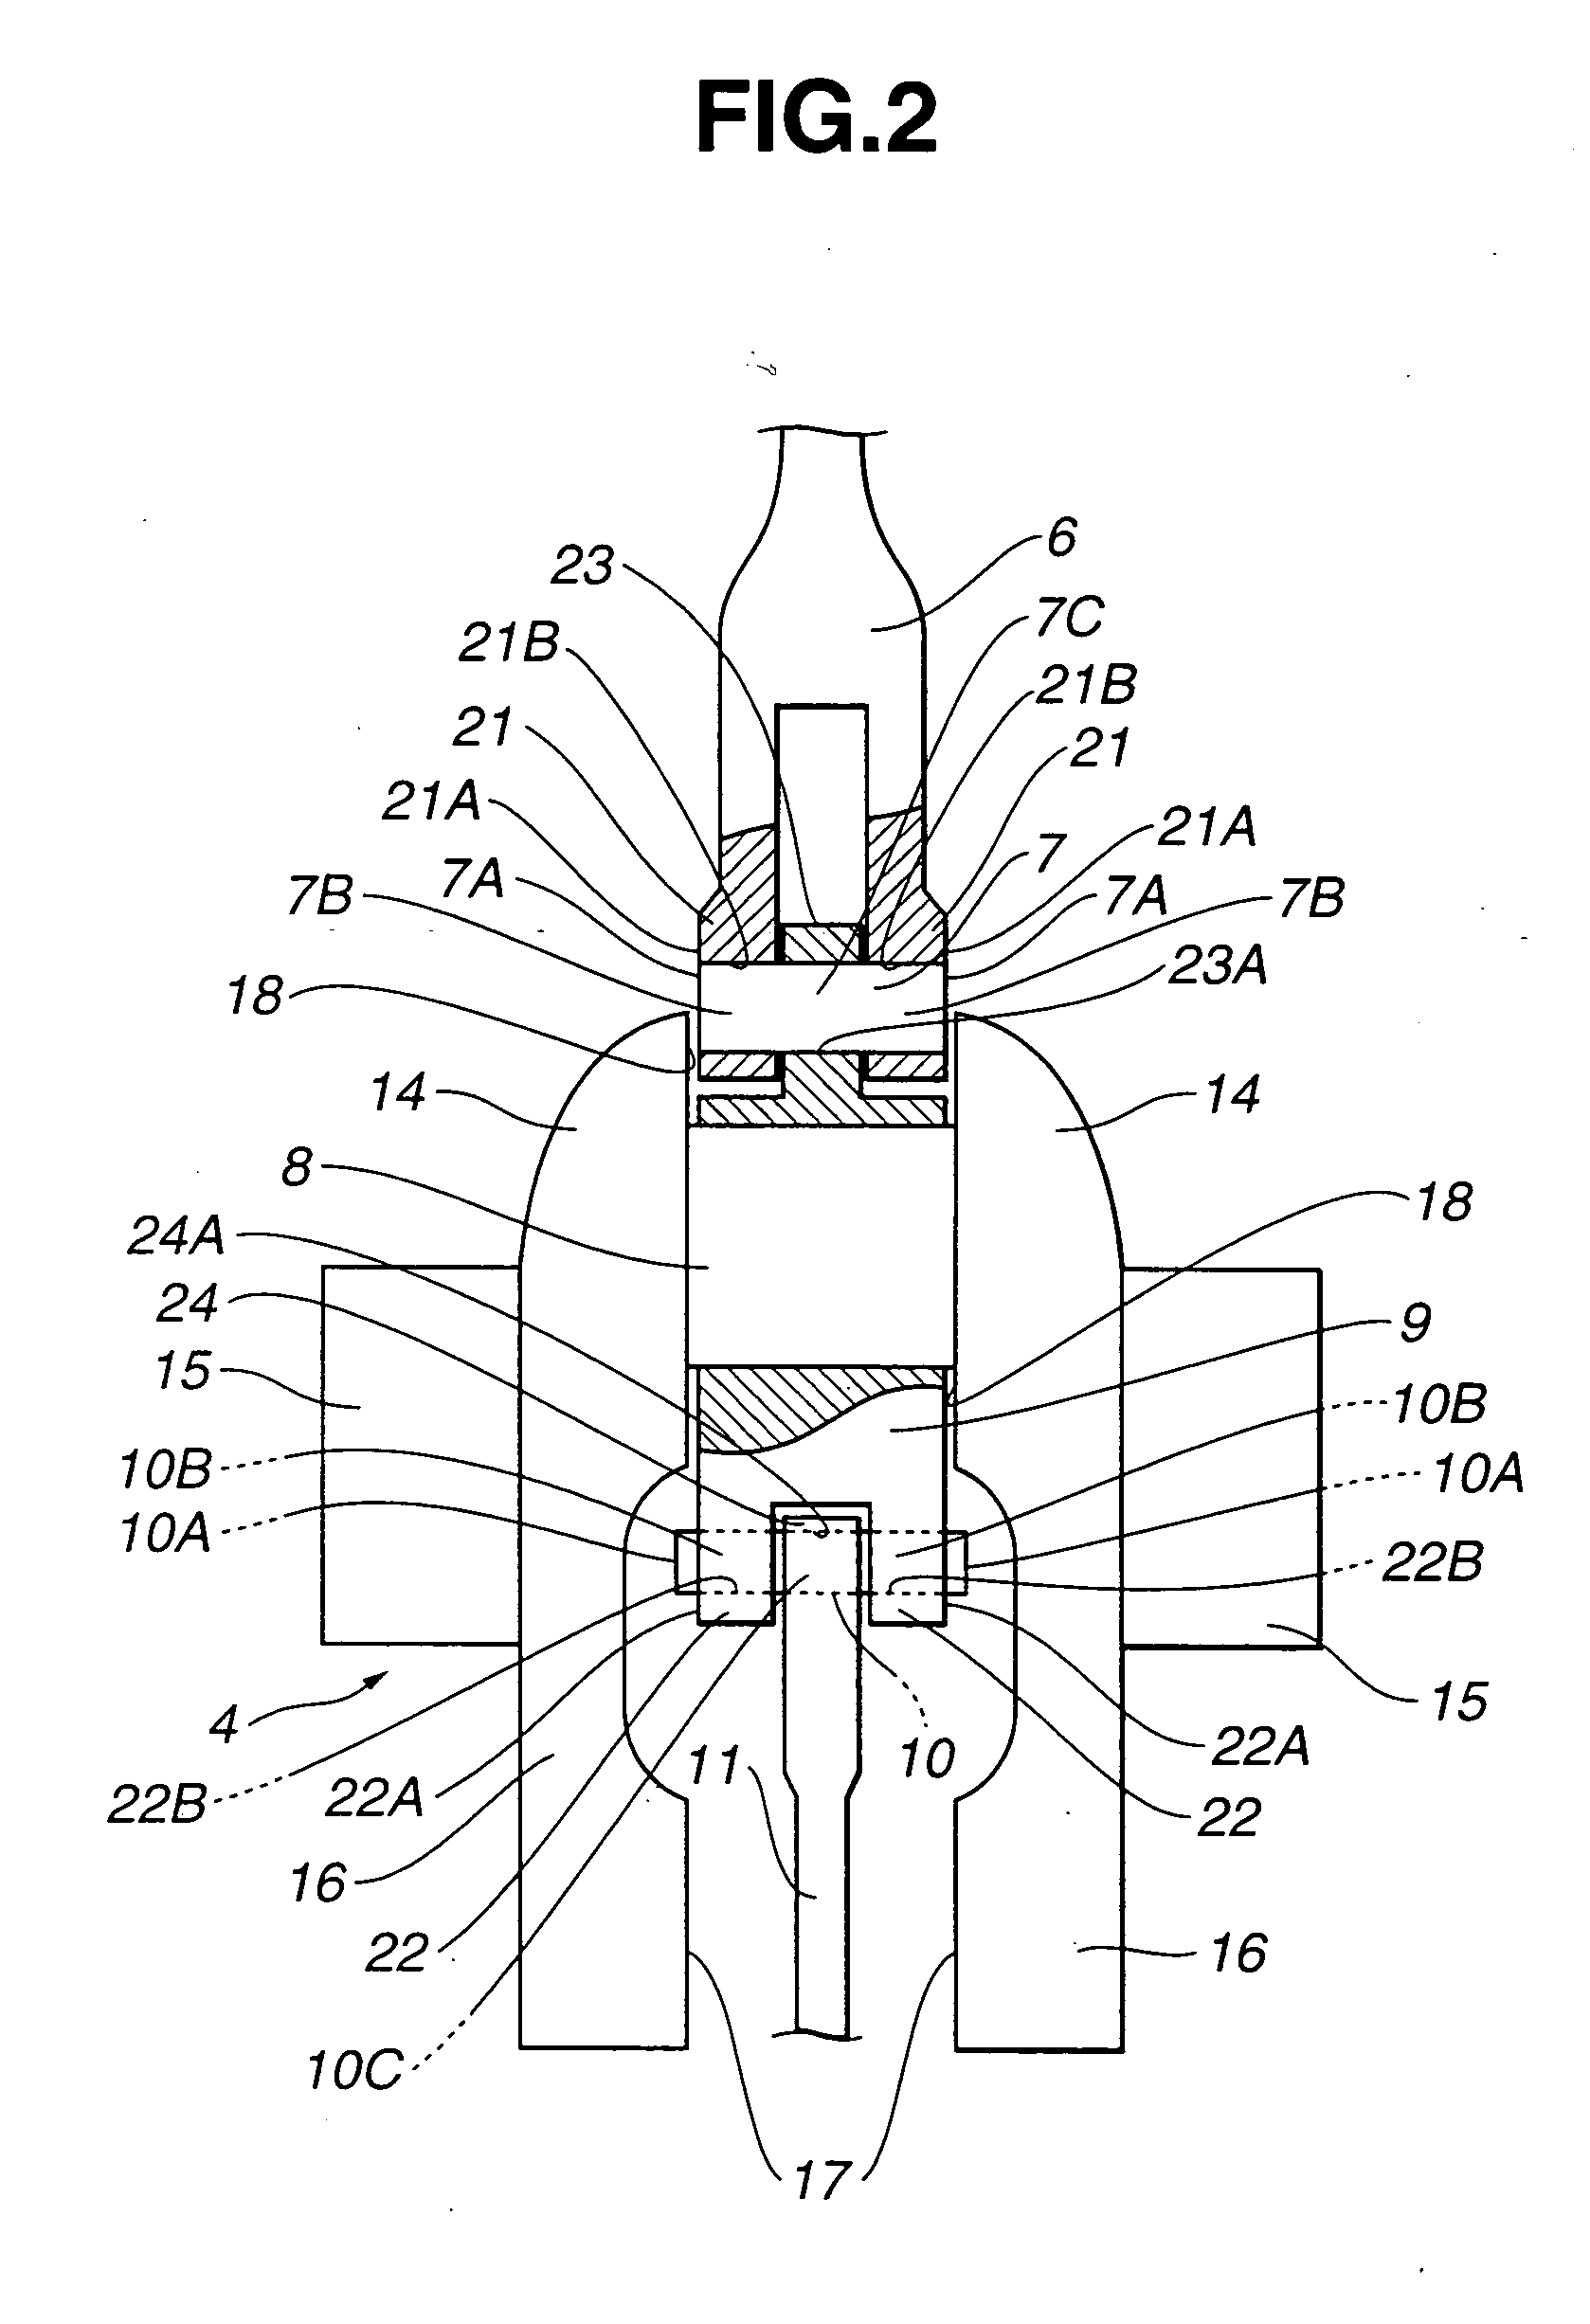 Multi-link piston crank mechanism for internal combustion engine